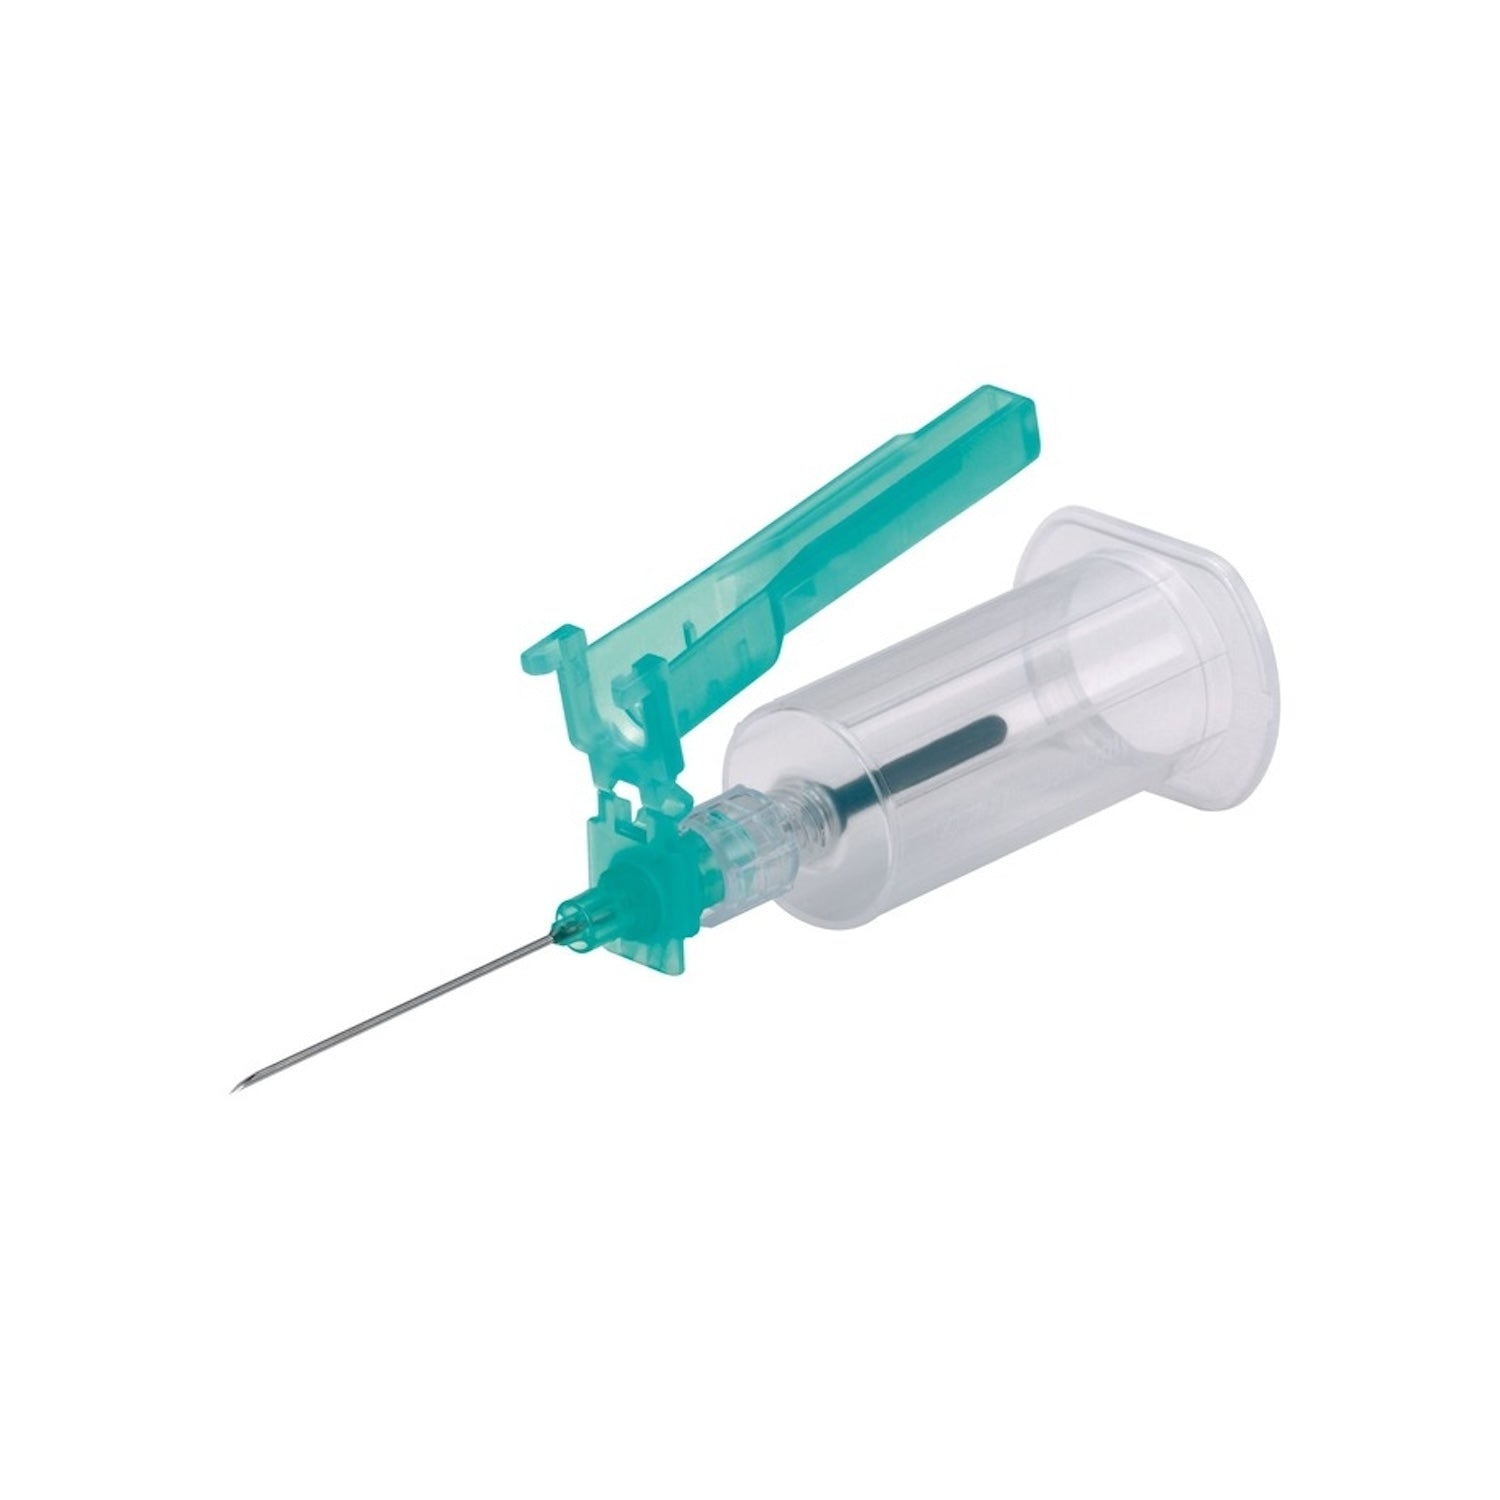 Unistik Vacuflip | 21G / 1.5" Needle with Holder | Pack of 50